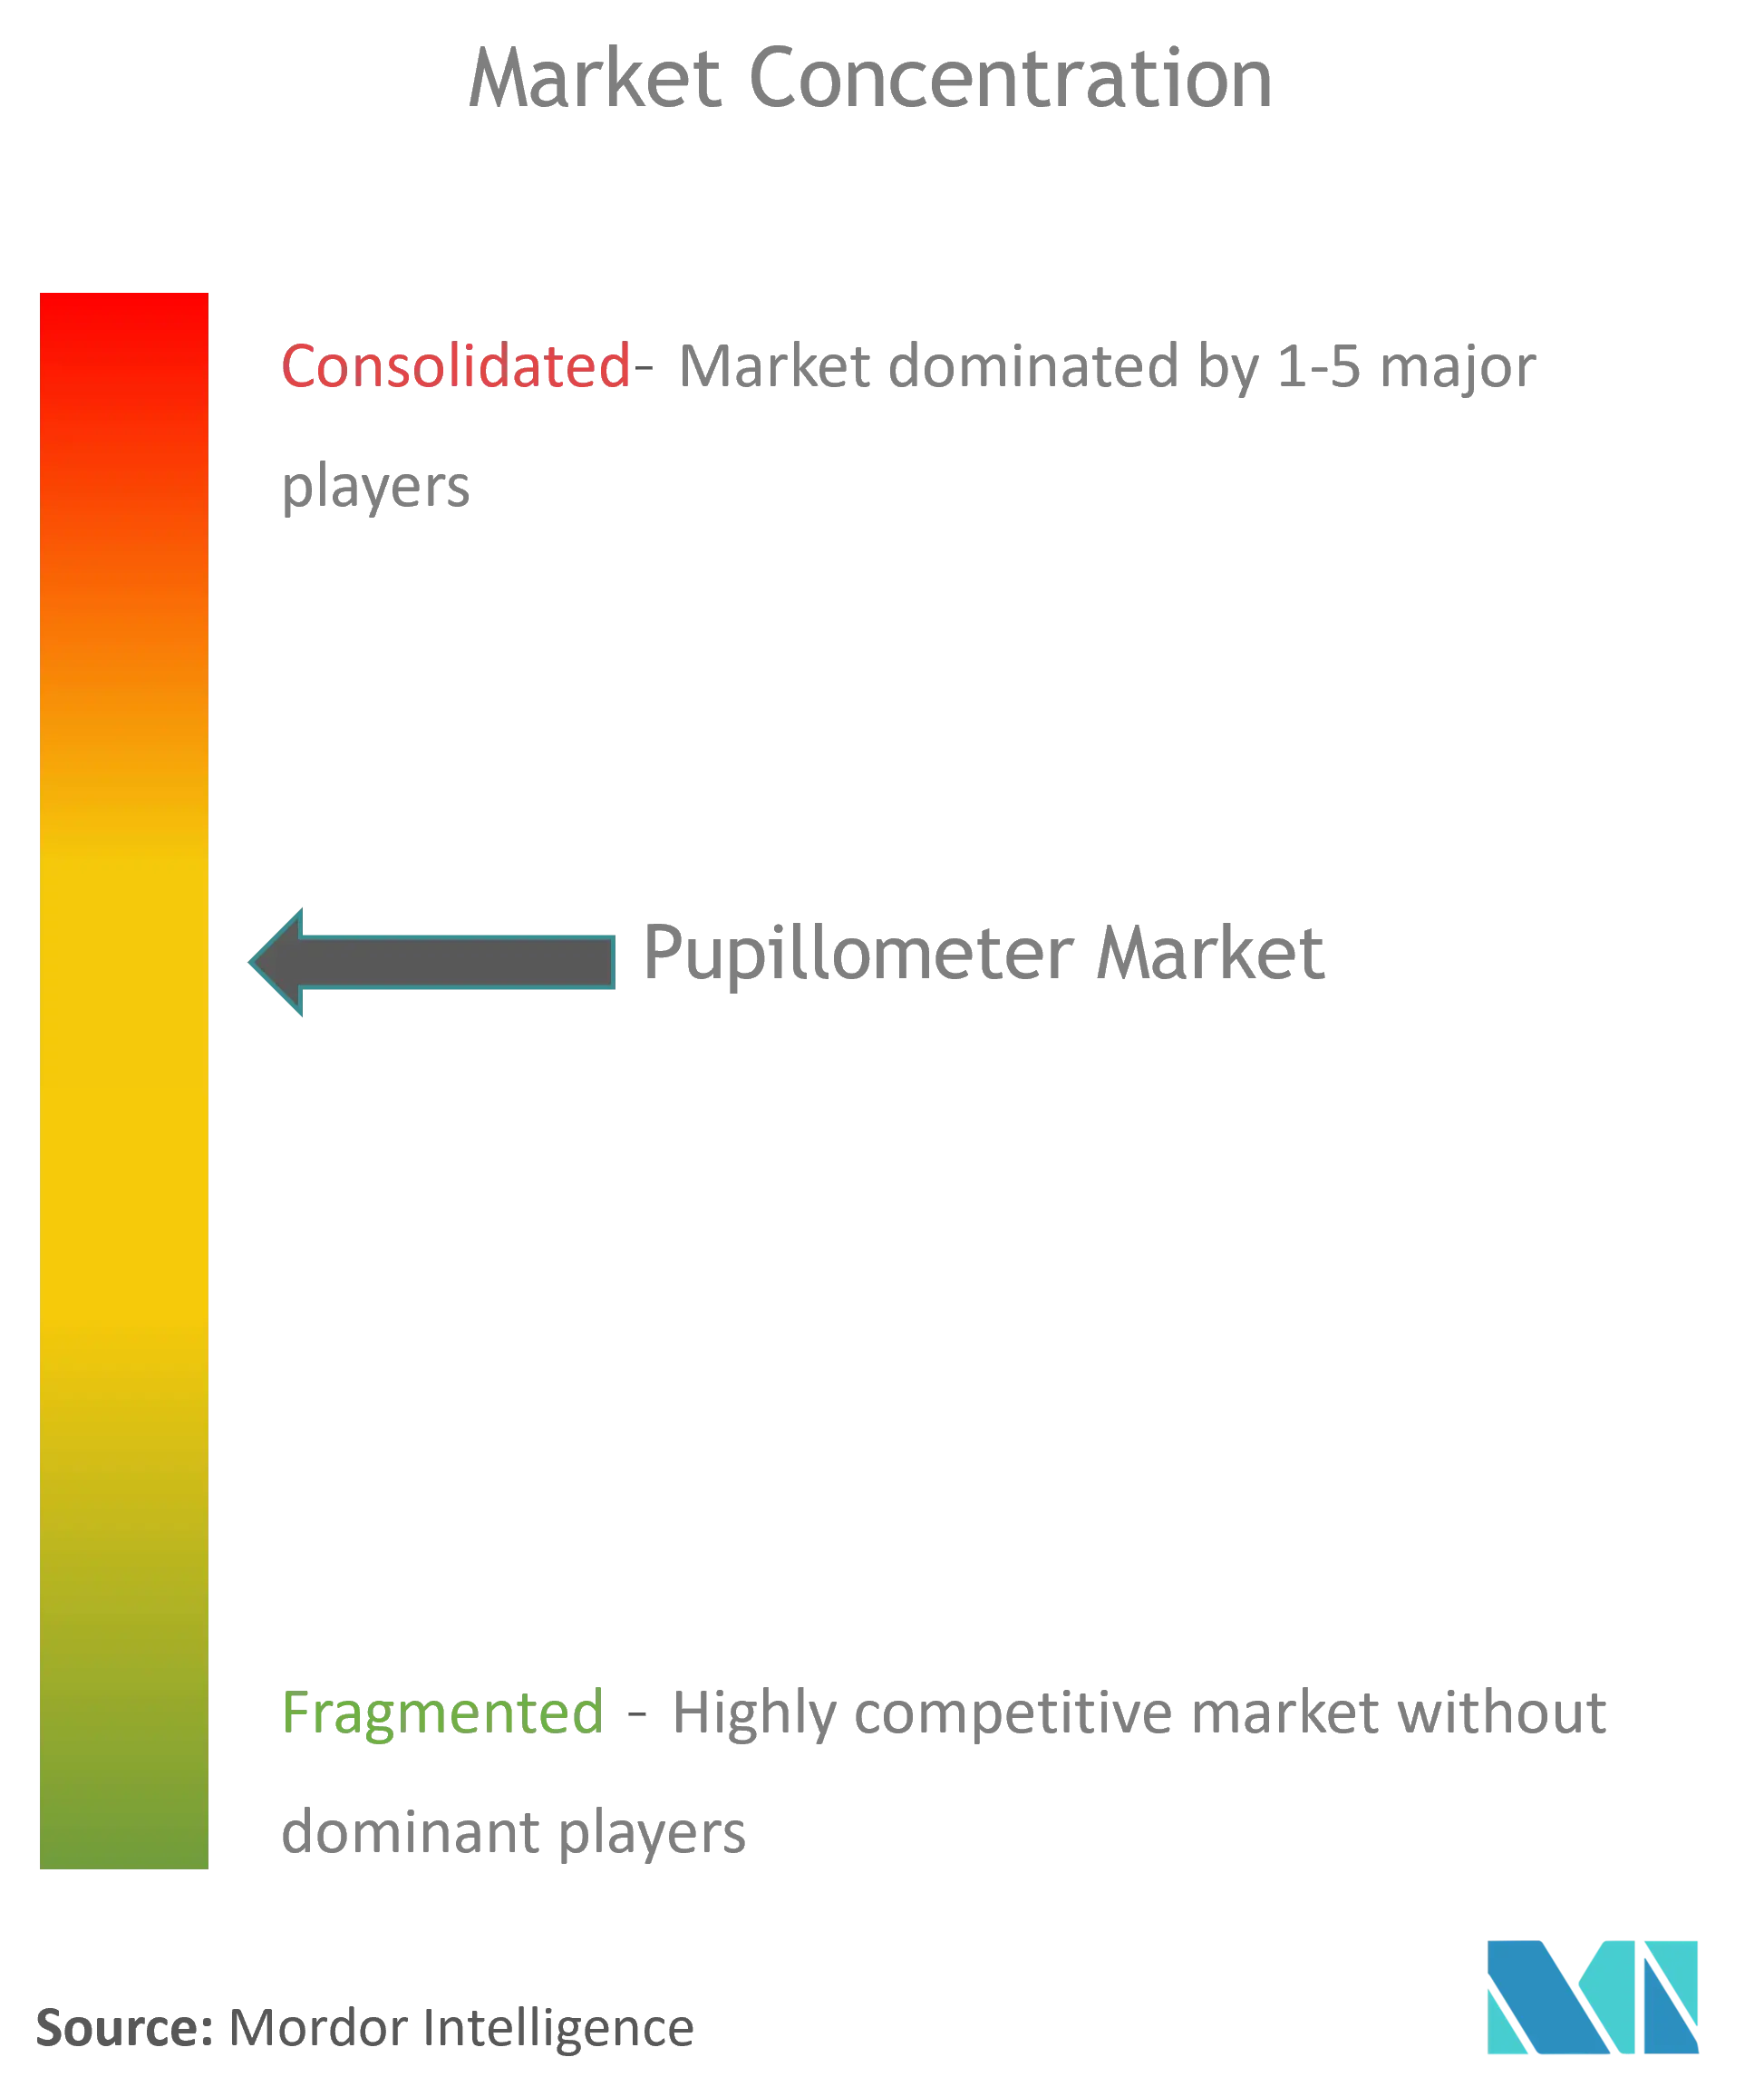 Pupillometer Market Concentration